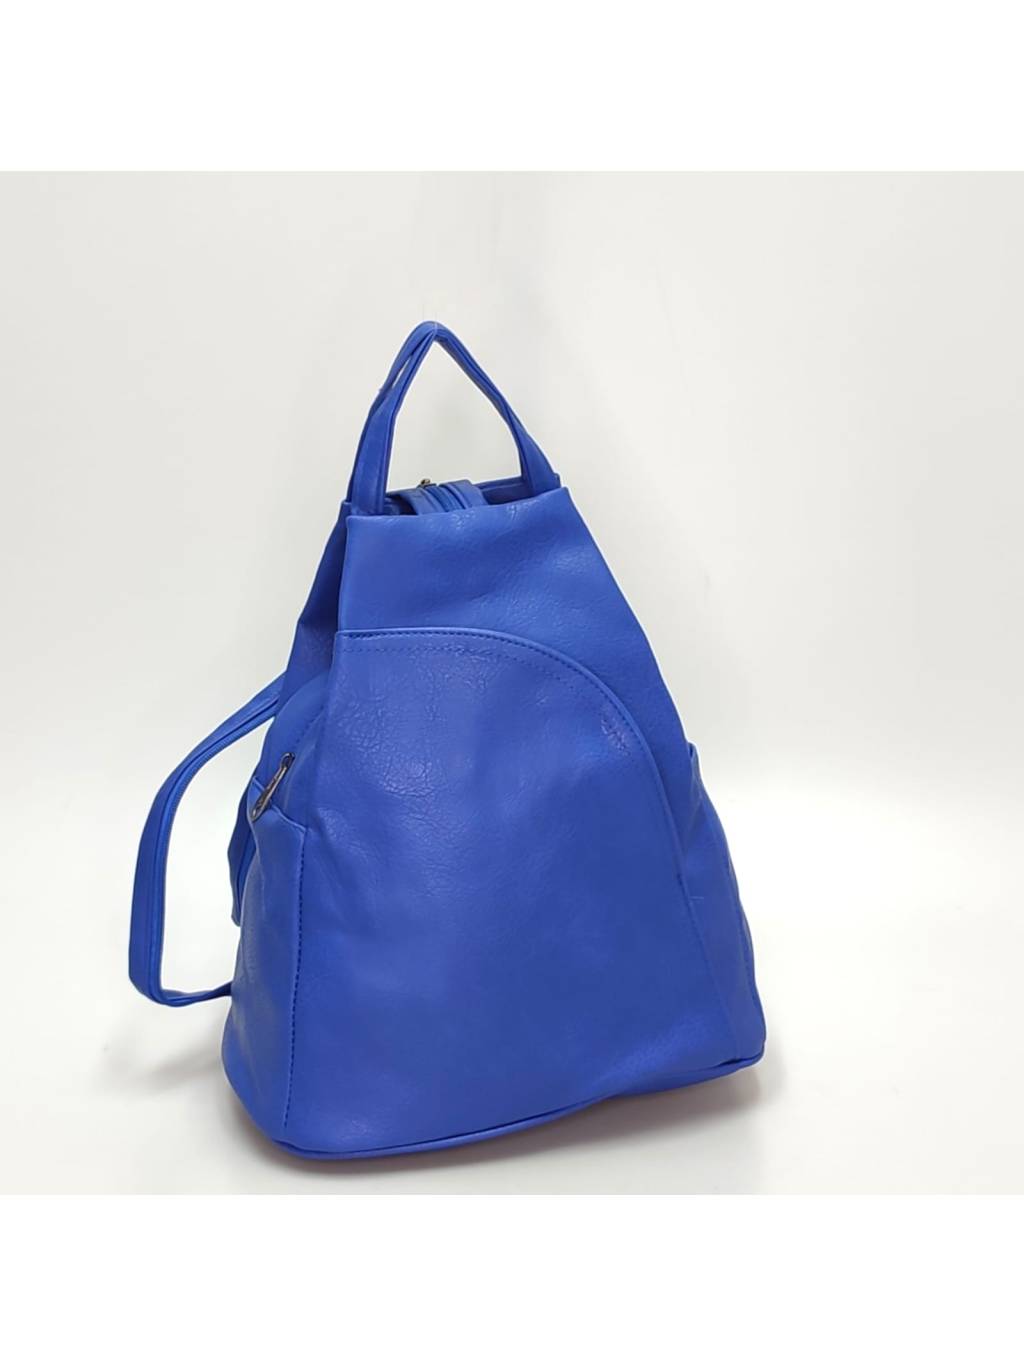 Dámsky ruksak 6870 modrý www.kabelky vypredaj (7)